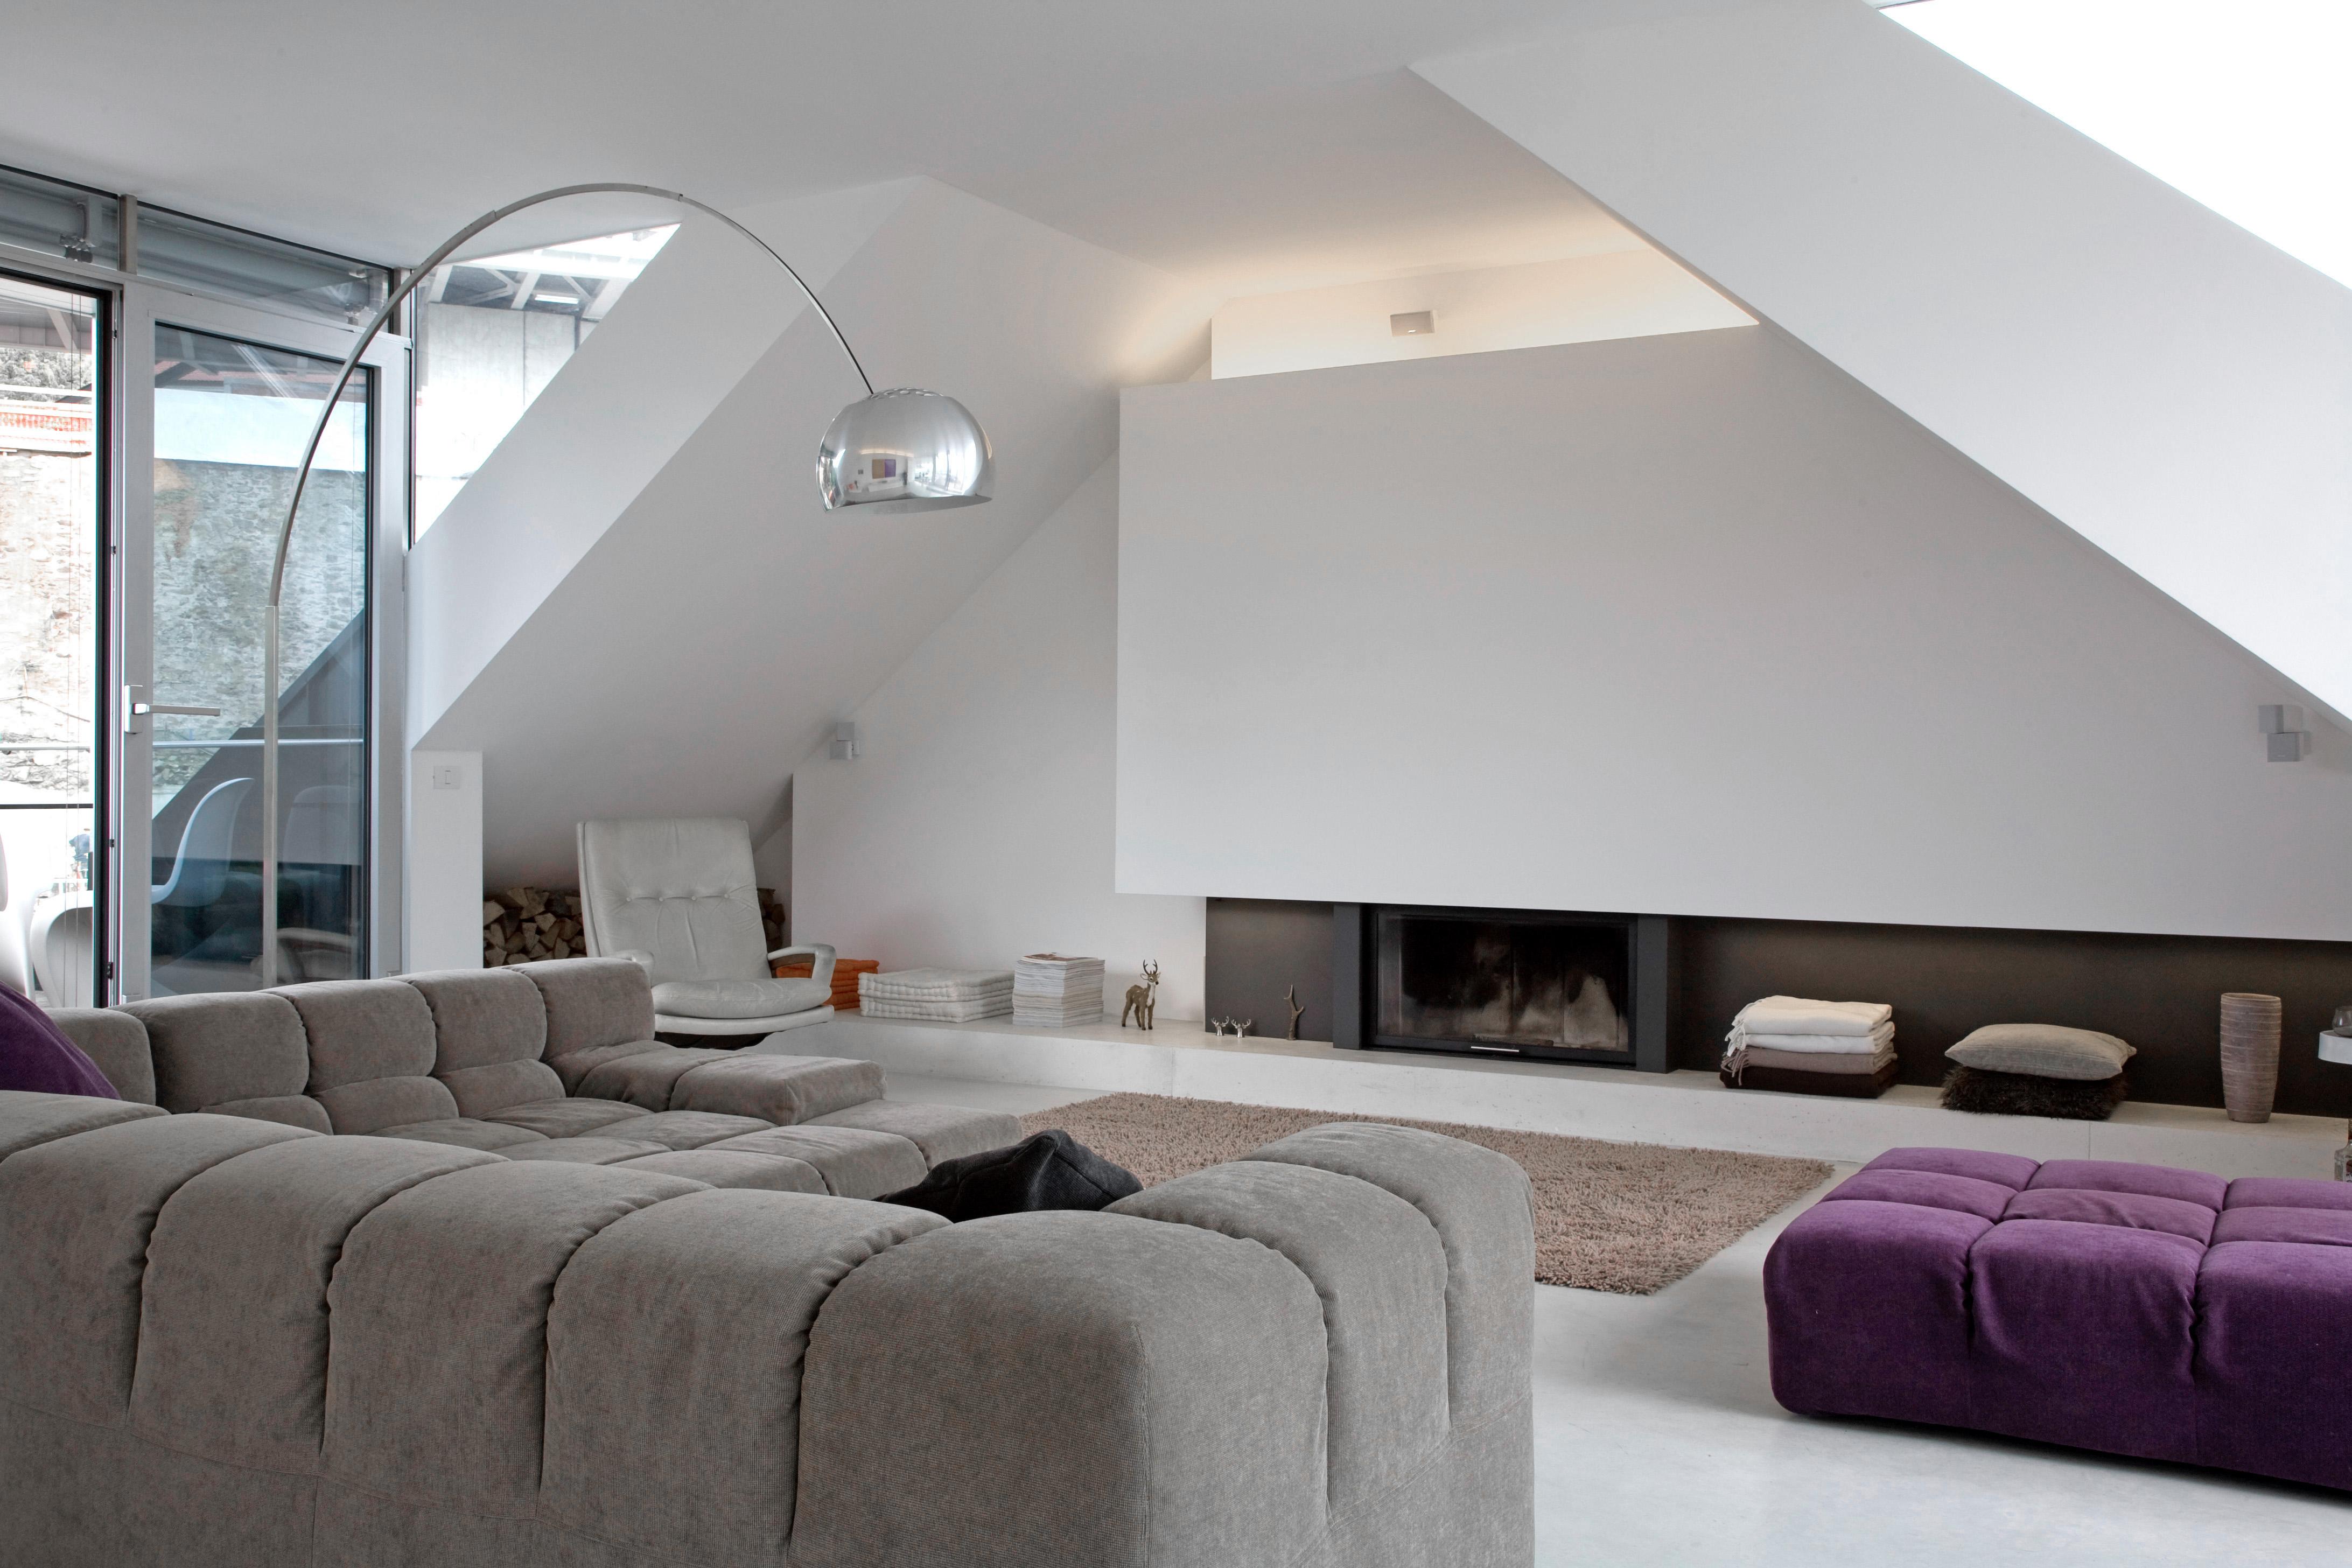 Penthouse S
Linz
#penthouse #innenarchitektur #interiordesign #modern @Destilat©MSFotostudio